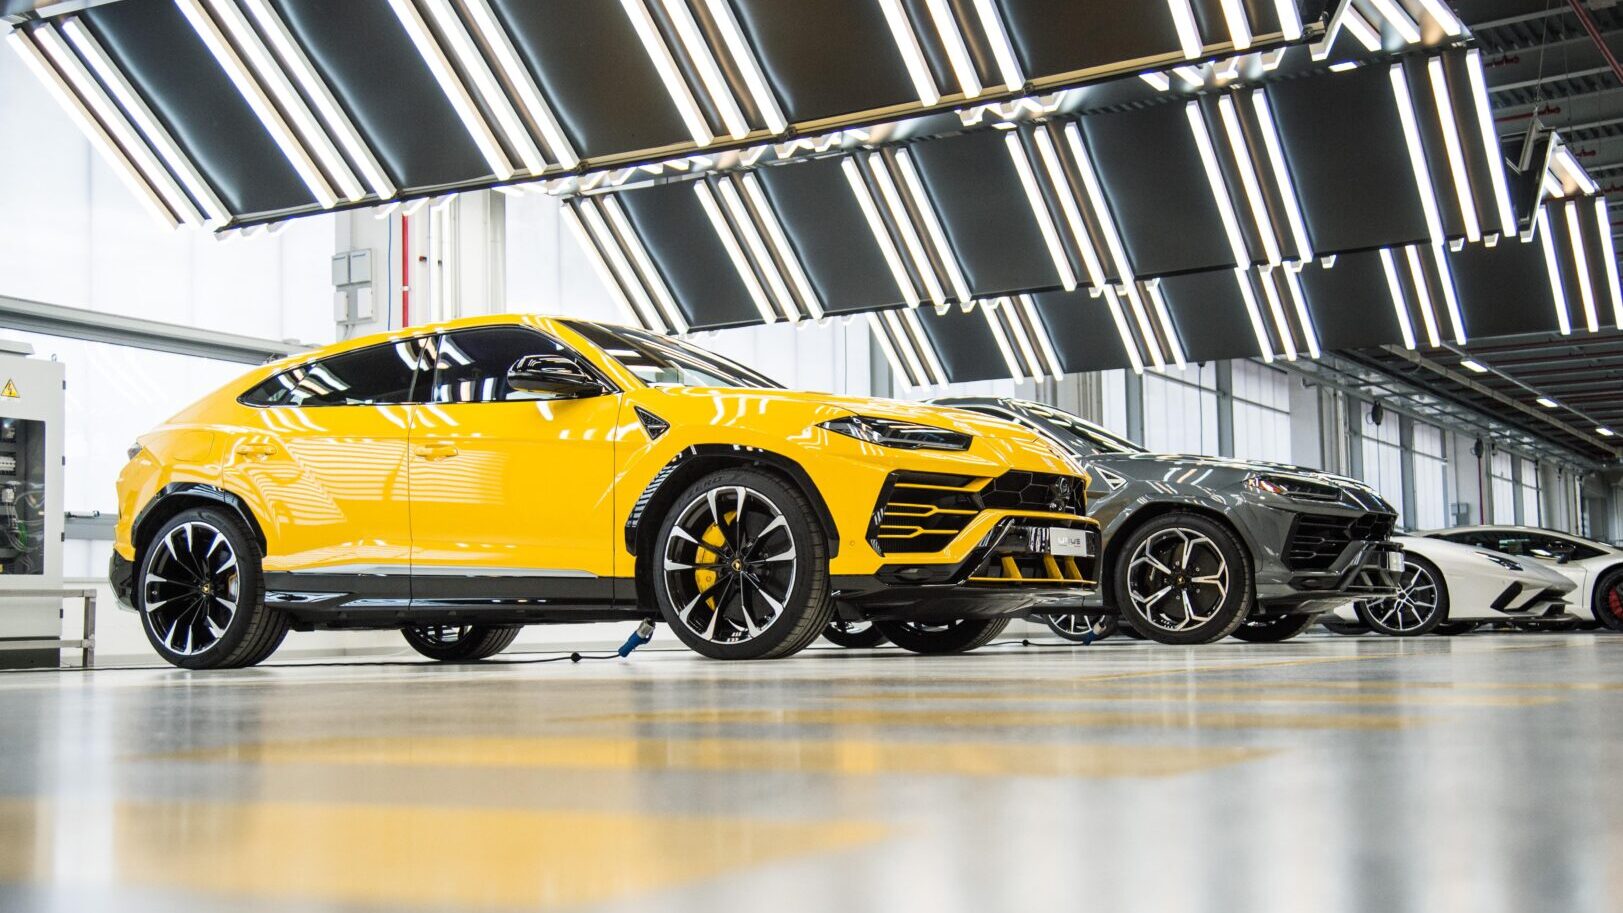 Side view of Lamborghini Urus Parked Alongside Other Models